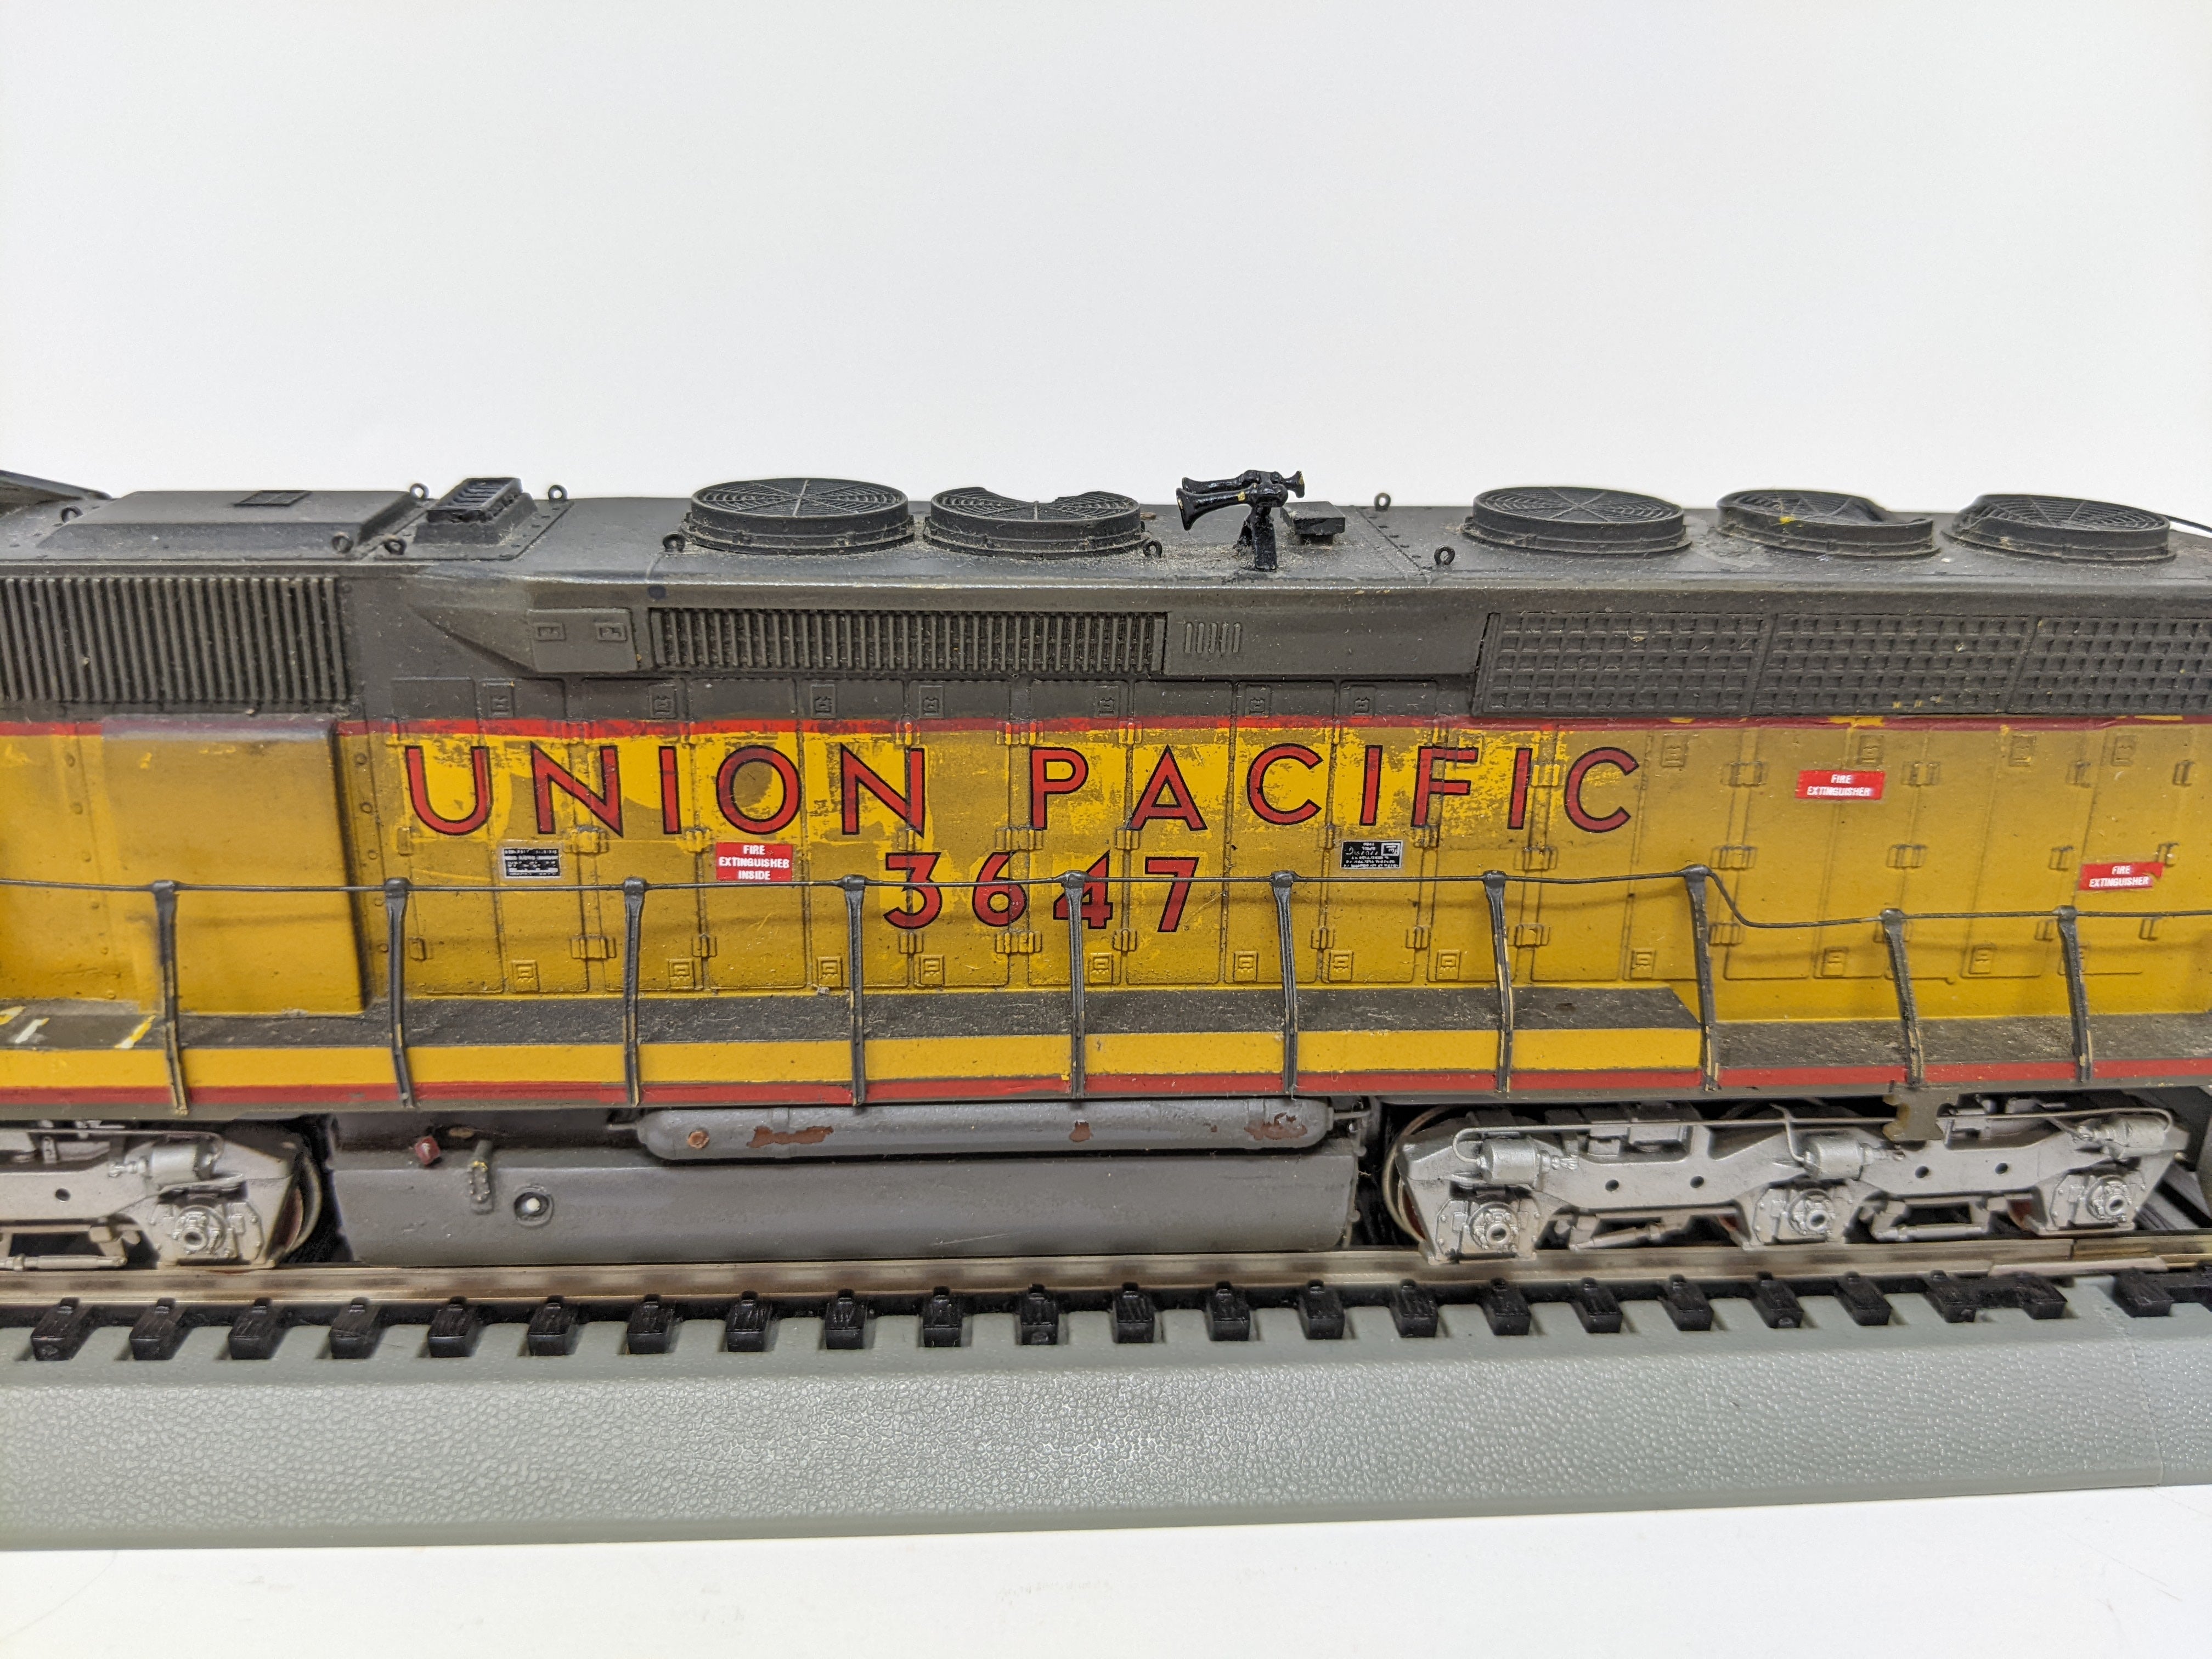 USED HO Scale, SD45 Diesel Locomotive, Union Pacific #3647, Runs, Custom Wreckage